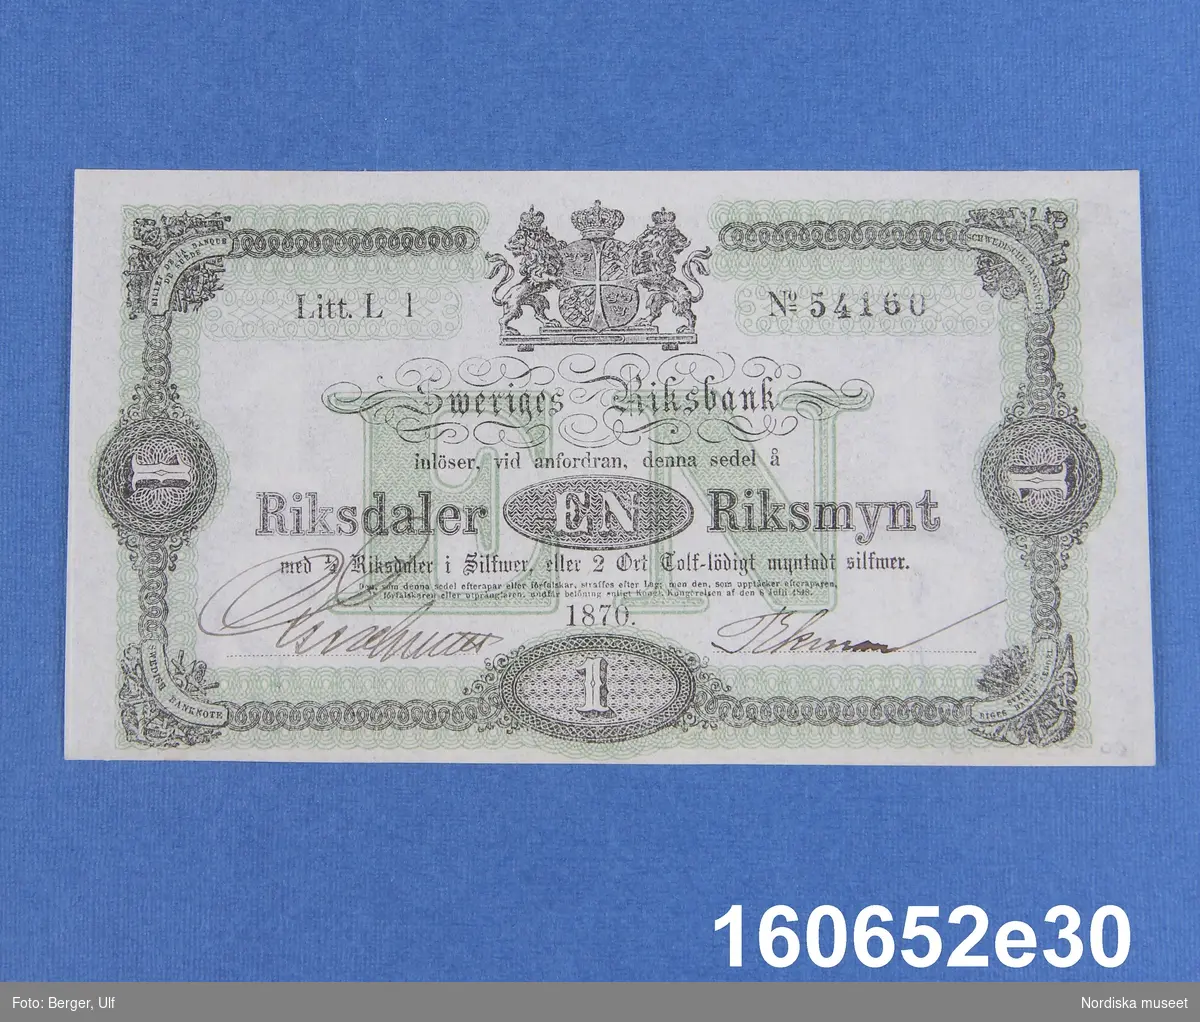 Sveriges Riksbank, 1 riksdaler riksmynt. Daterad 1870, litt L l nr 54160.